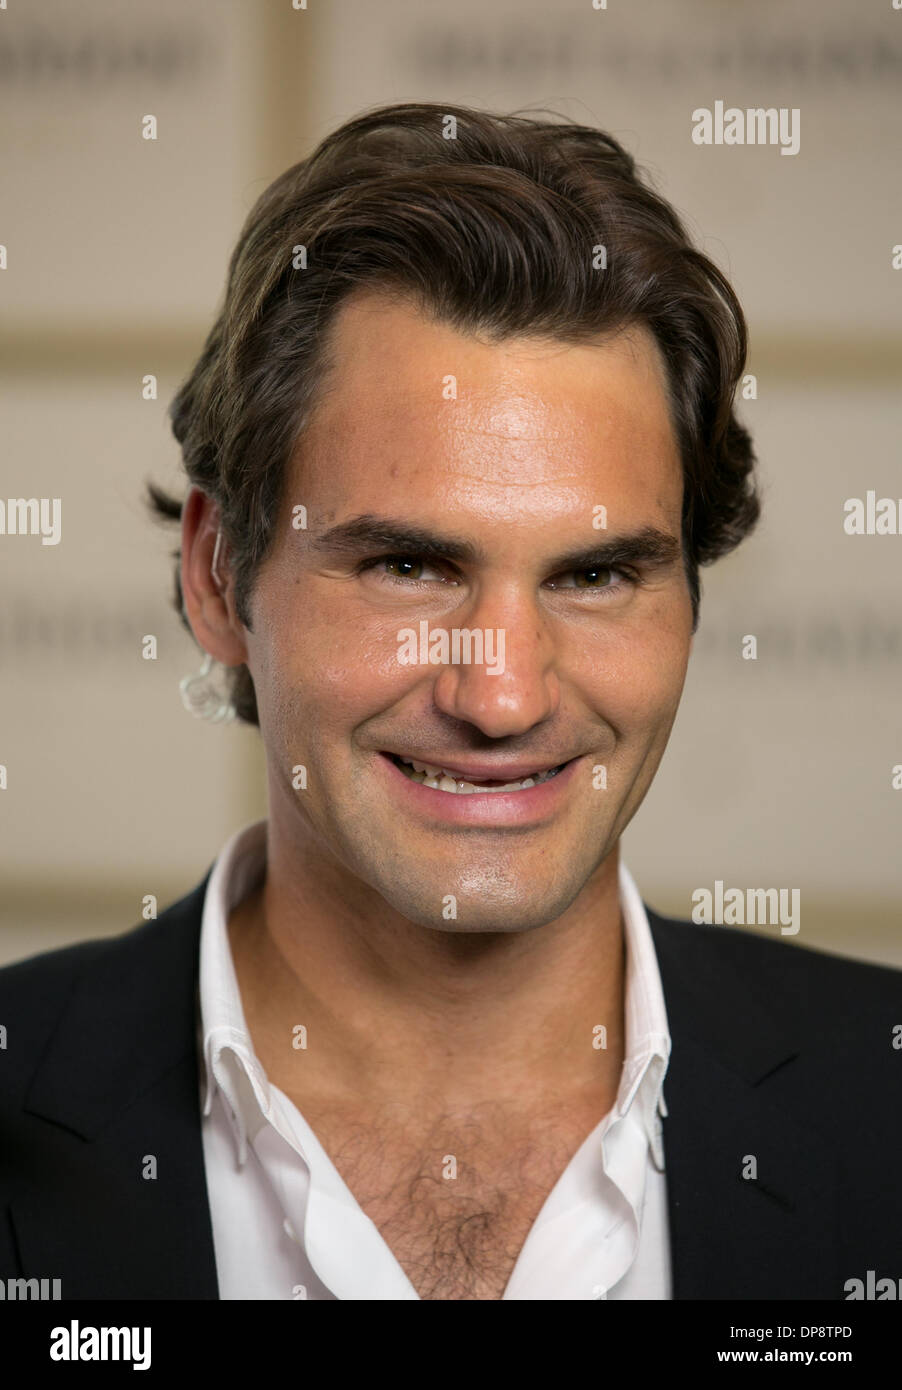 Roger Federer al Moet & Chandon evento, Melbourne, 9 gennaio 2014. Foto Stock